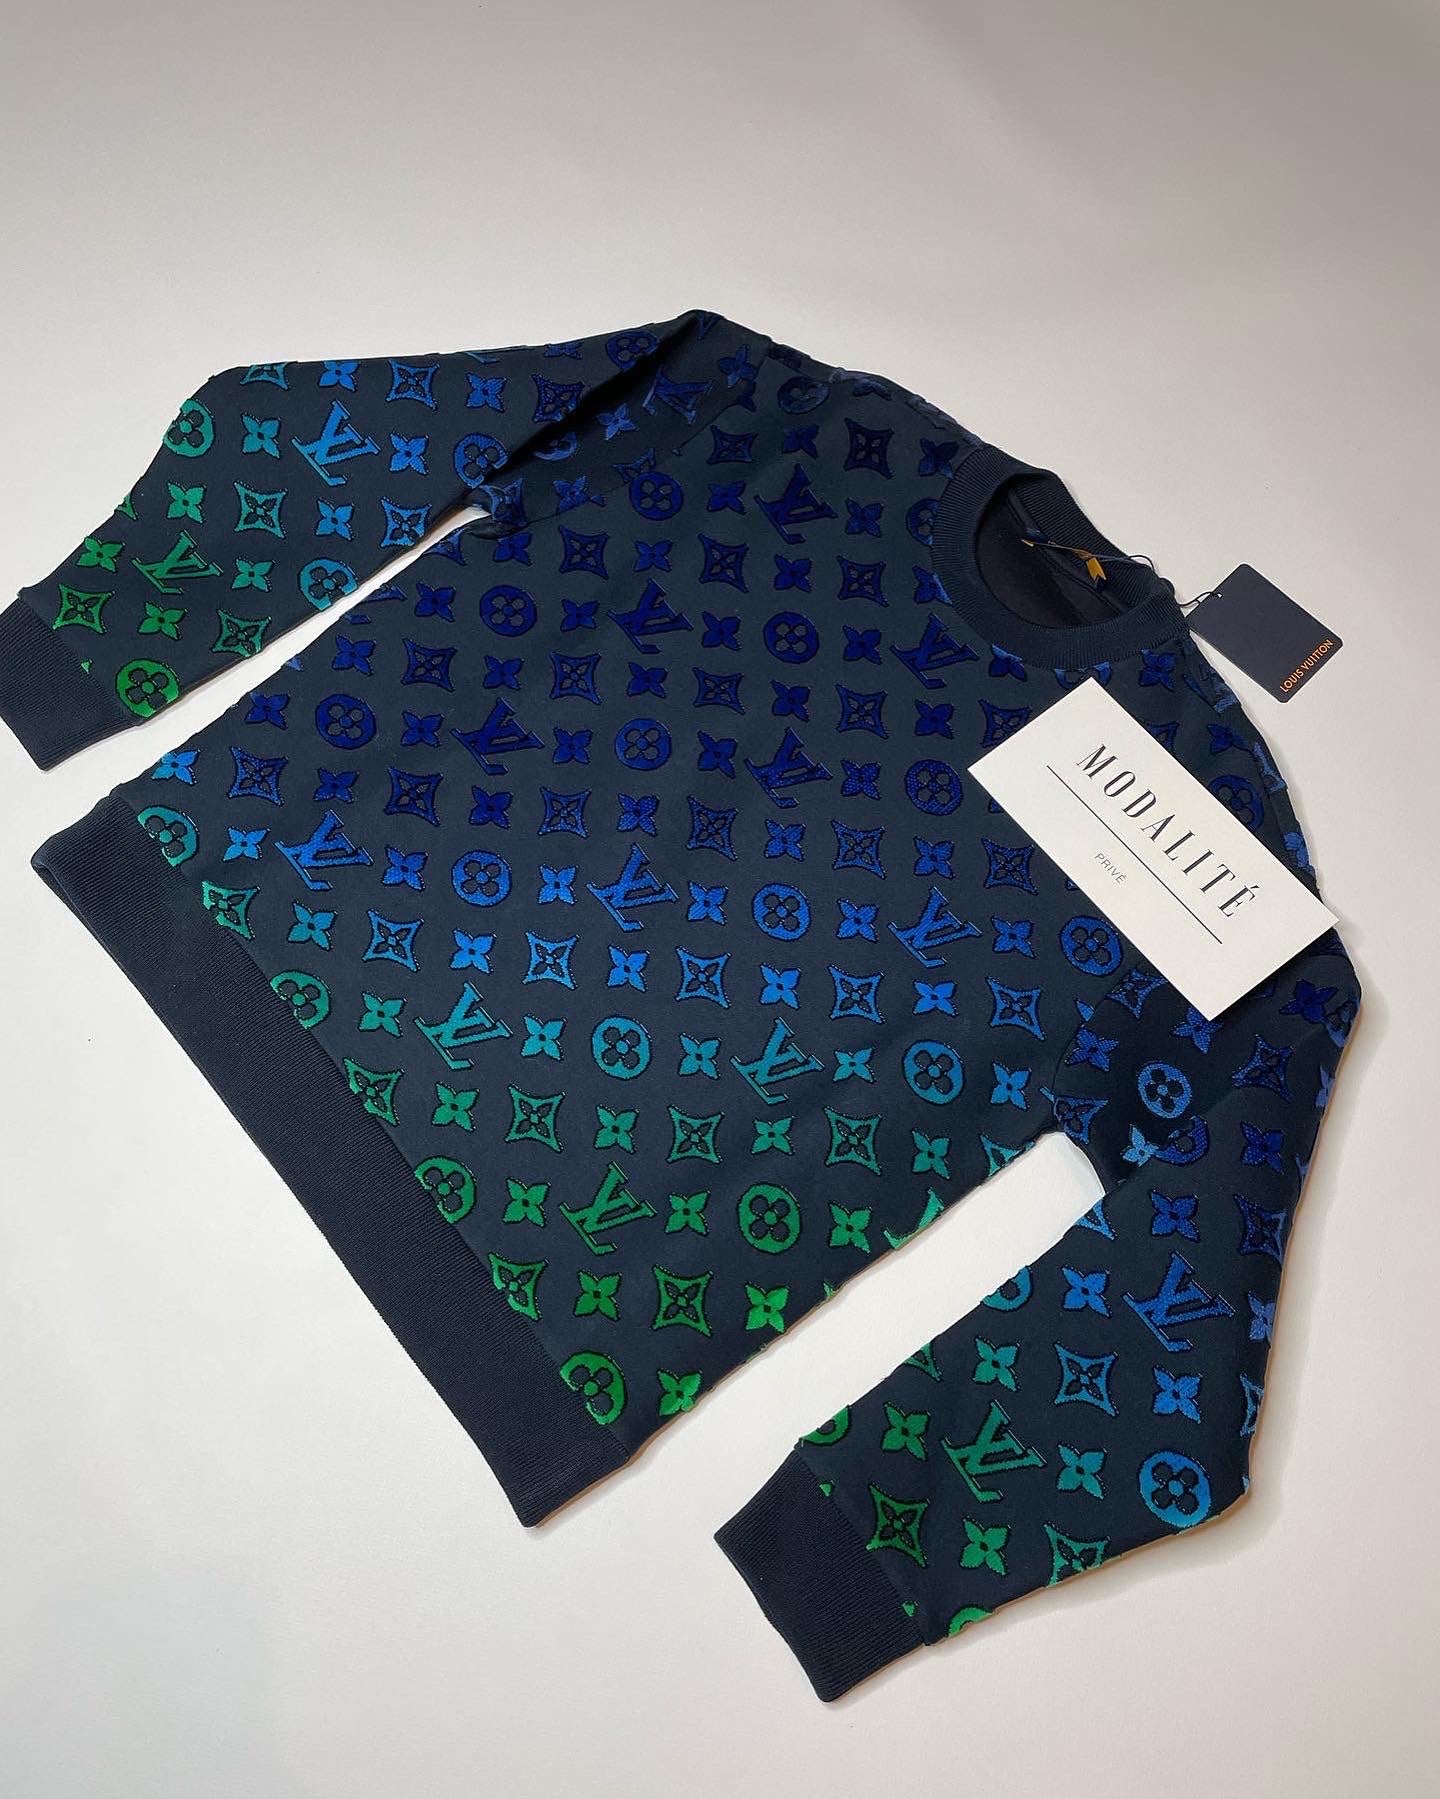 Louis Vuitton Louis Vuitton monogram sweater blue